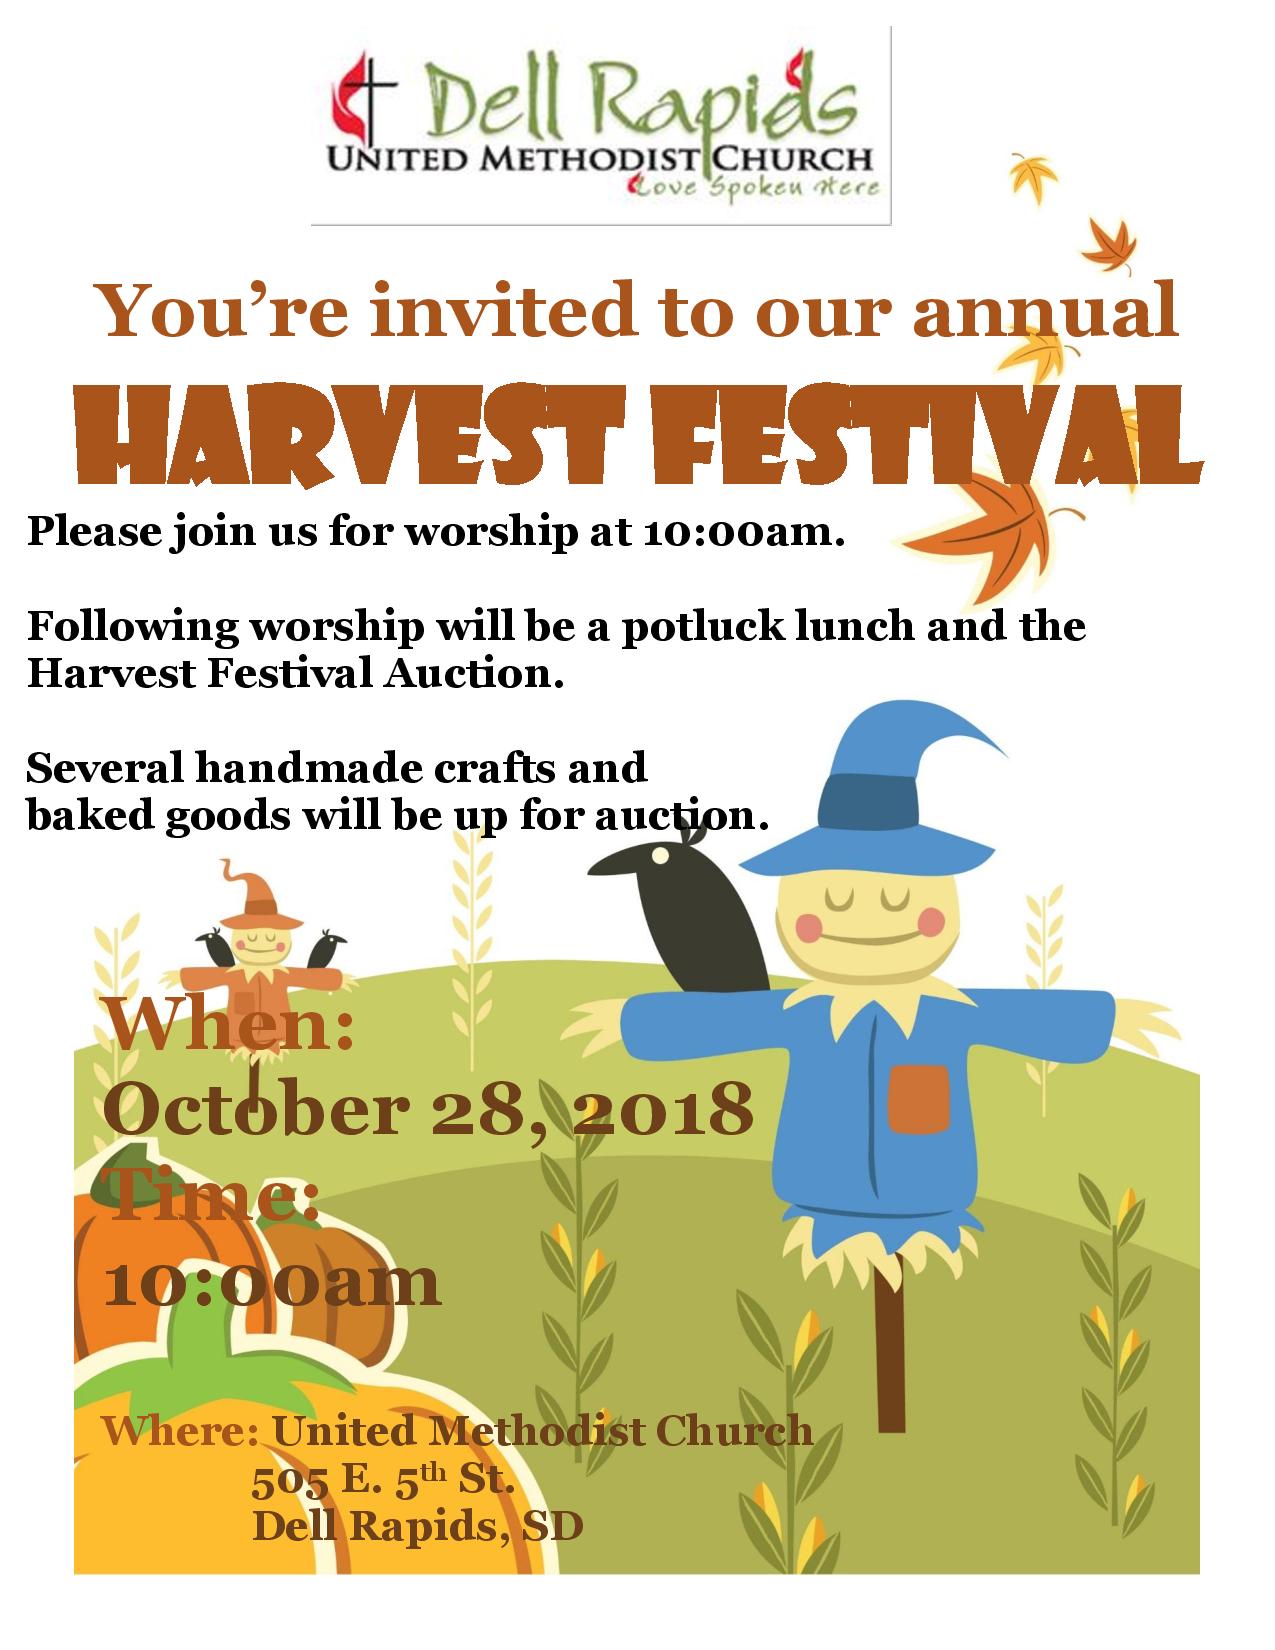 Harvest Festival United Methodist Church Dell Rapids South Dakota